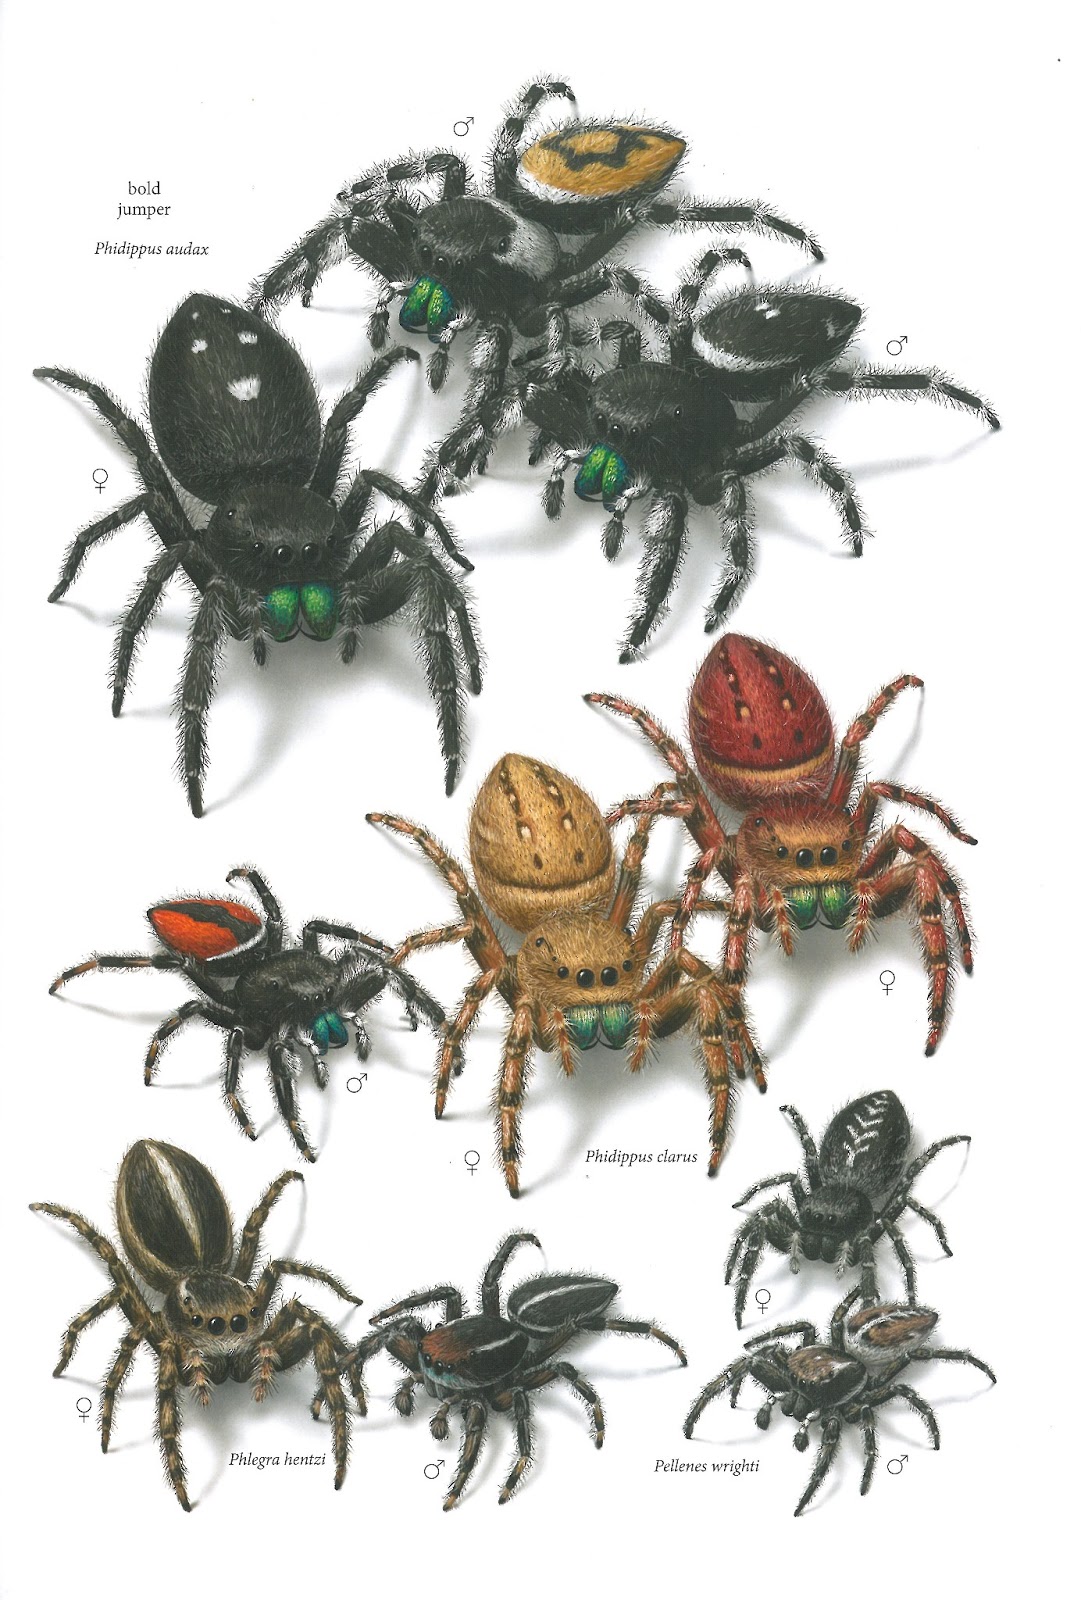 Ohio Birds and Biodiversity: New book! Common Spiders of North America